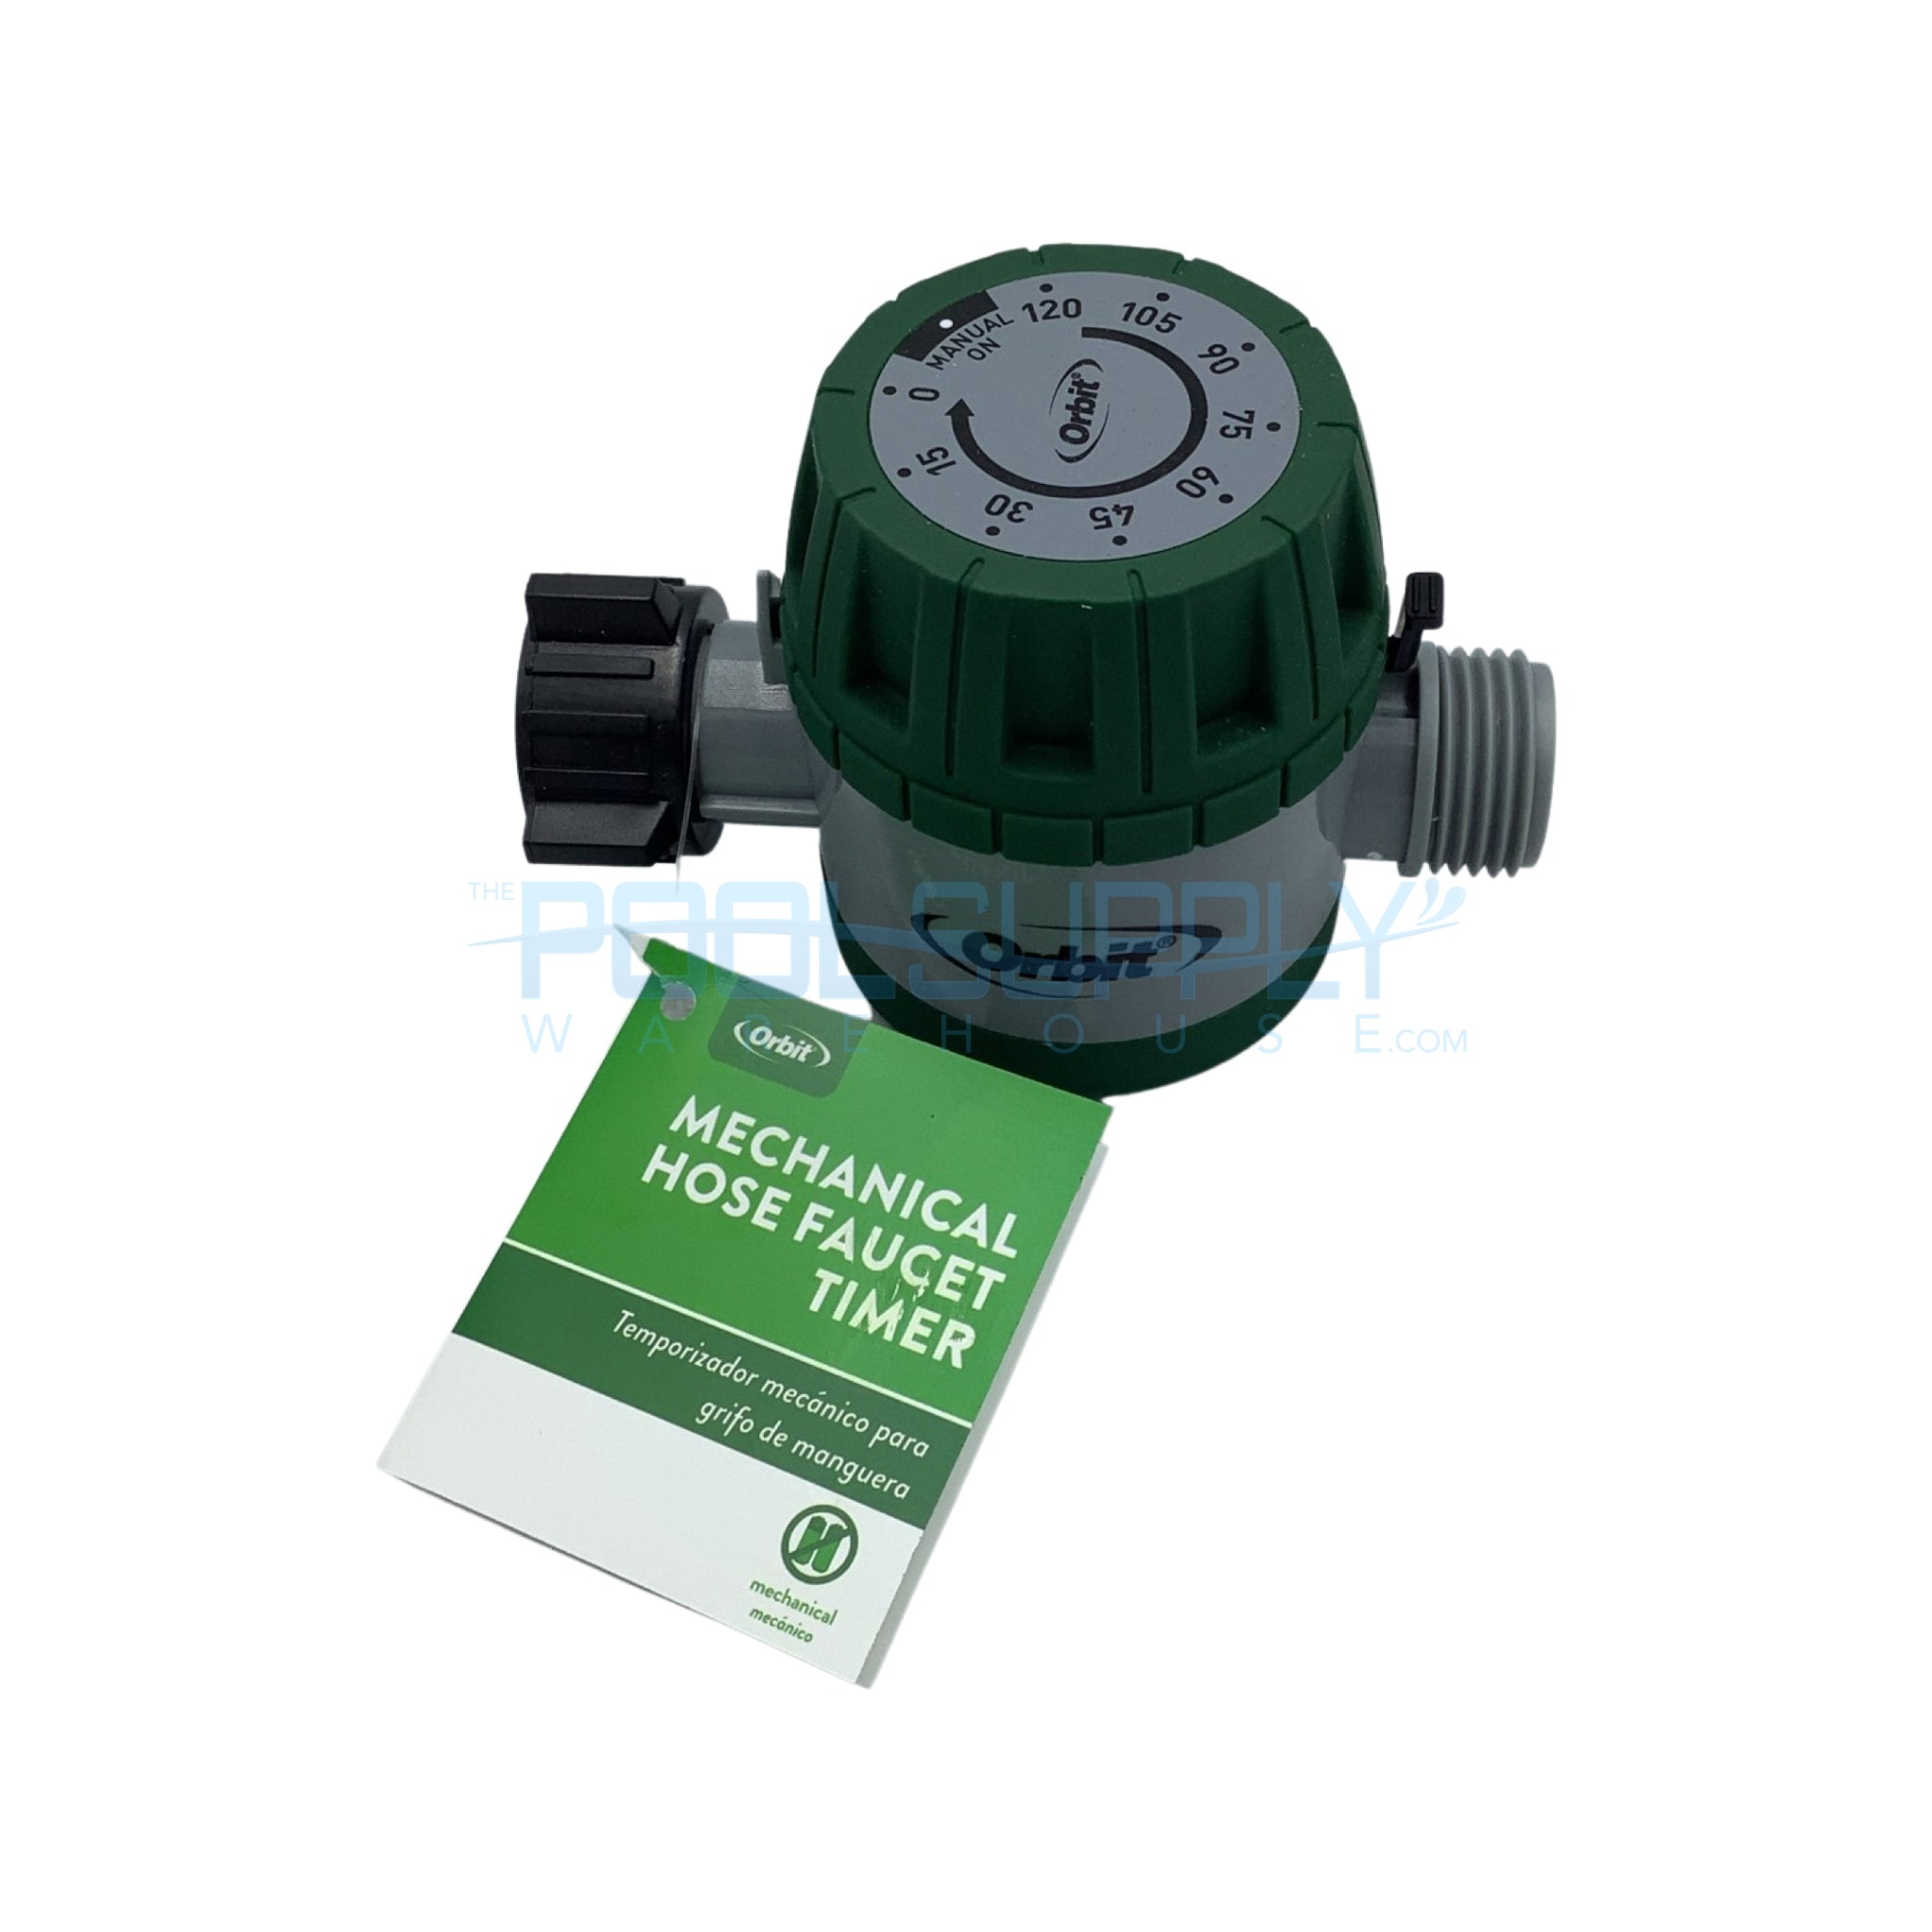 Orbit 62034 Mechanical Watering Timer